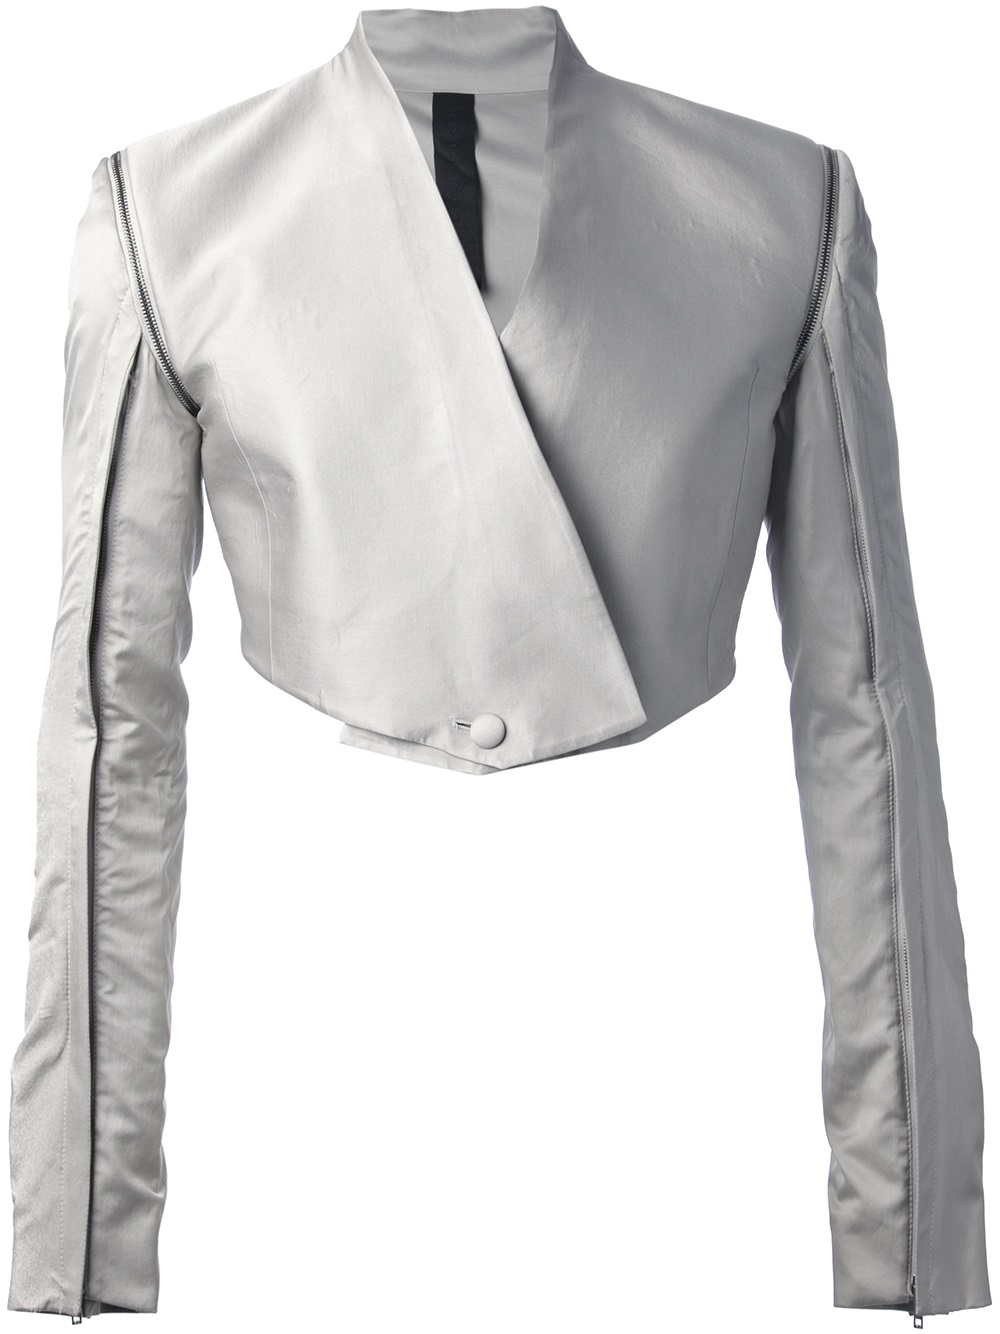 Lyst - Gareth Pugh Cropped Jacket in Gray for Men